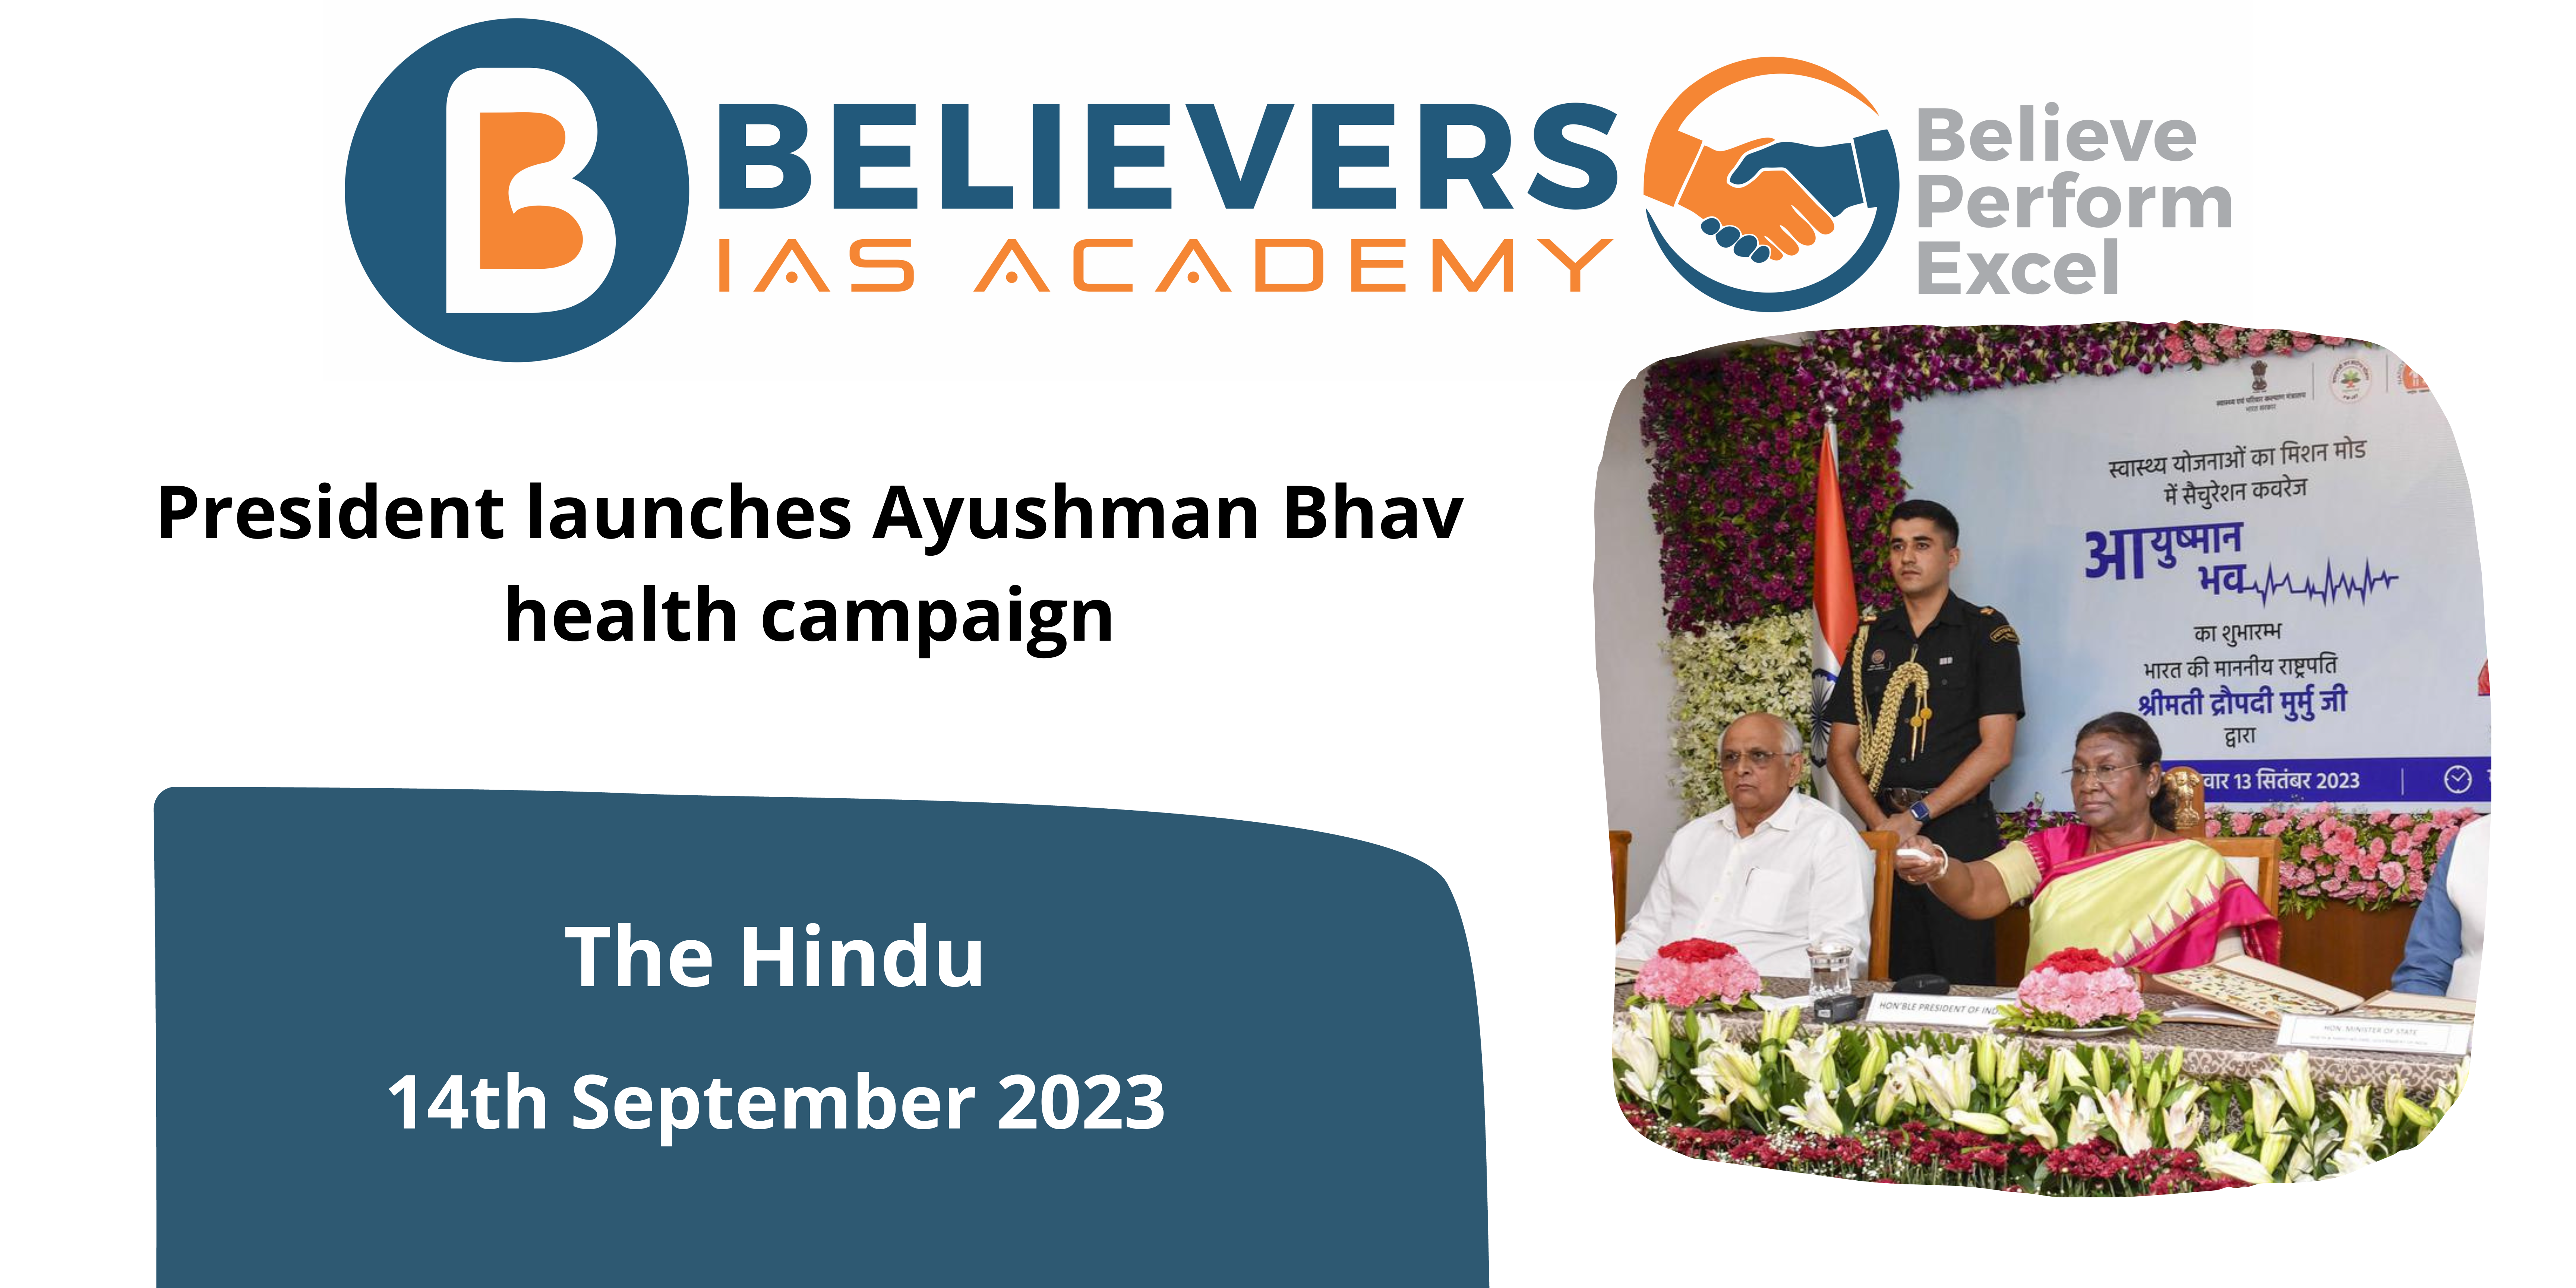 President launches Ayushman Bhav health campaign